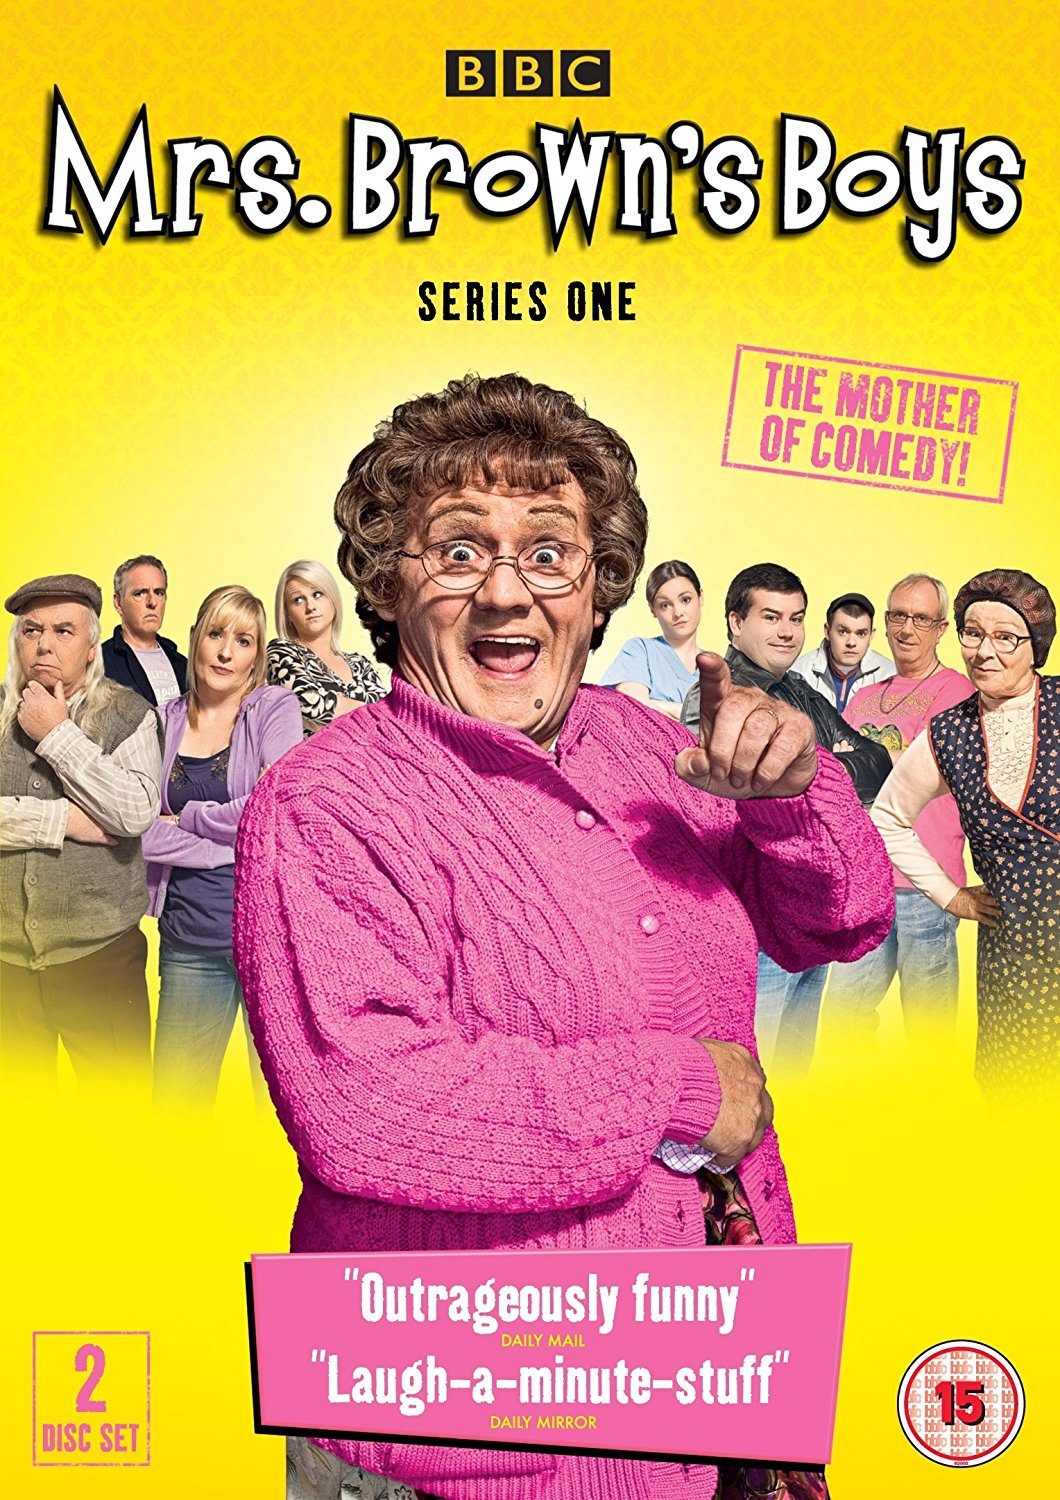 Mrs. Brown's Boys: The Original Series